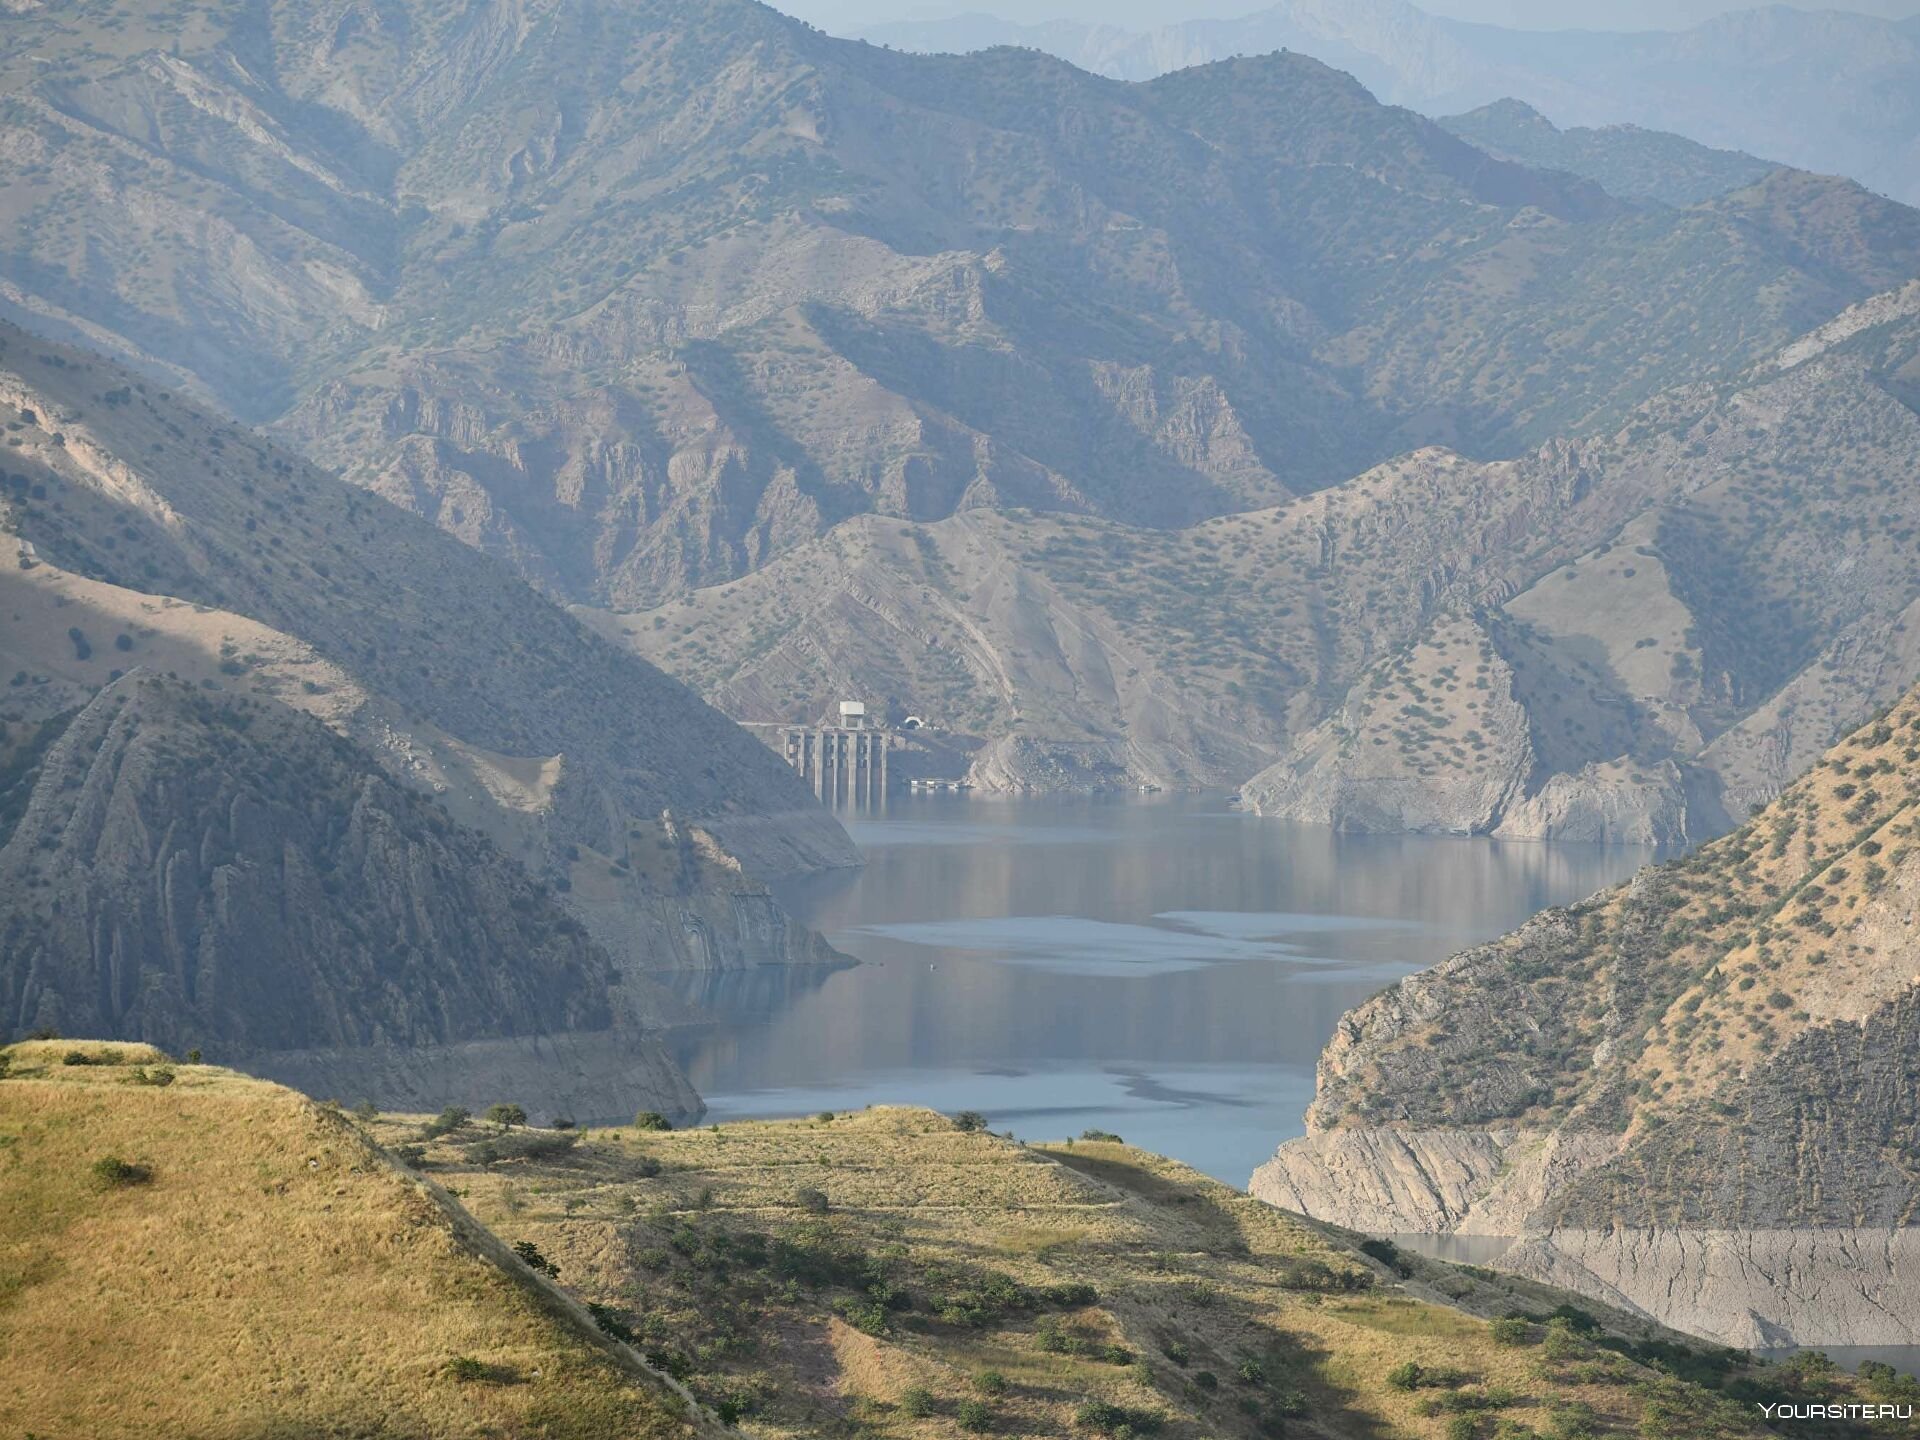 Насчет таджикистана. Нурекская ГЭС Таджикистан. ГЭС Нурек в Таджикистане. Нурекское водохранилище в Таджикистане. Нурек Таджикистан водохранилище.